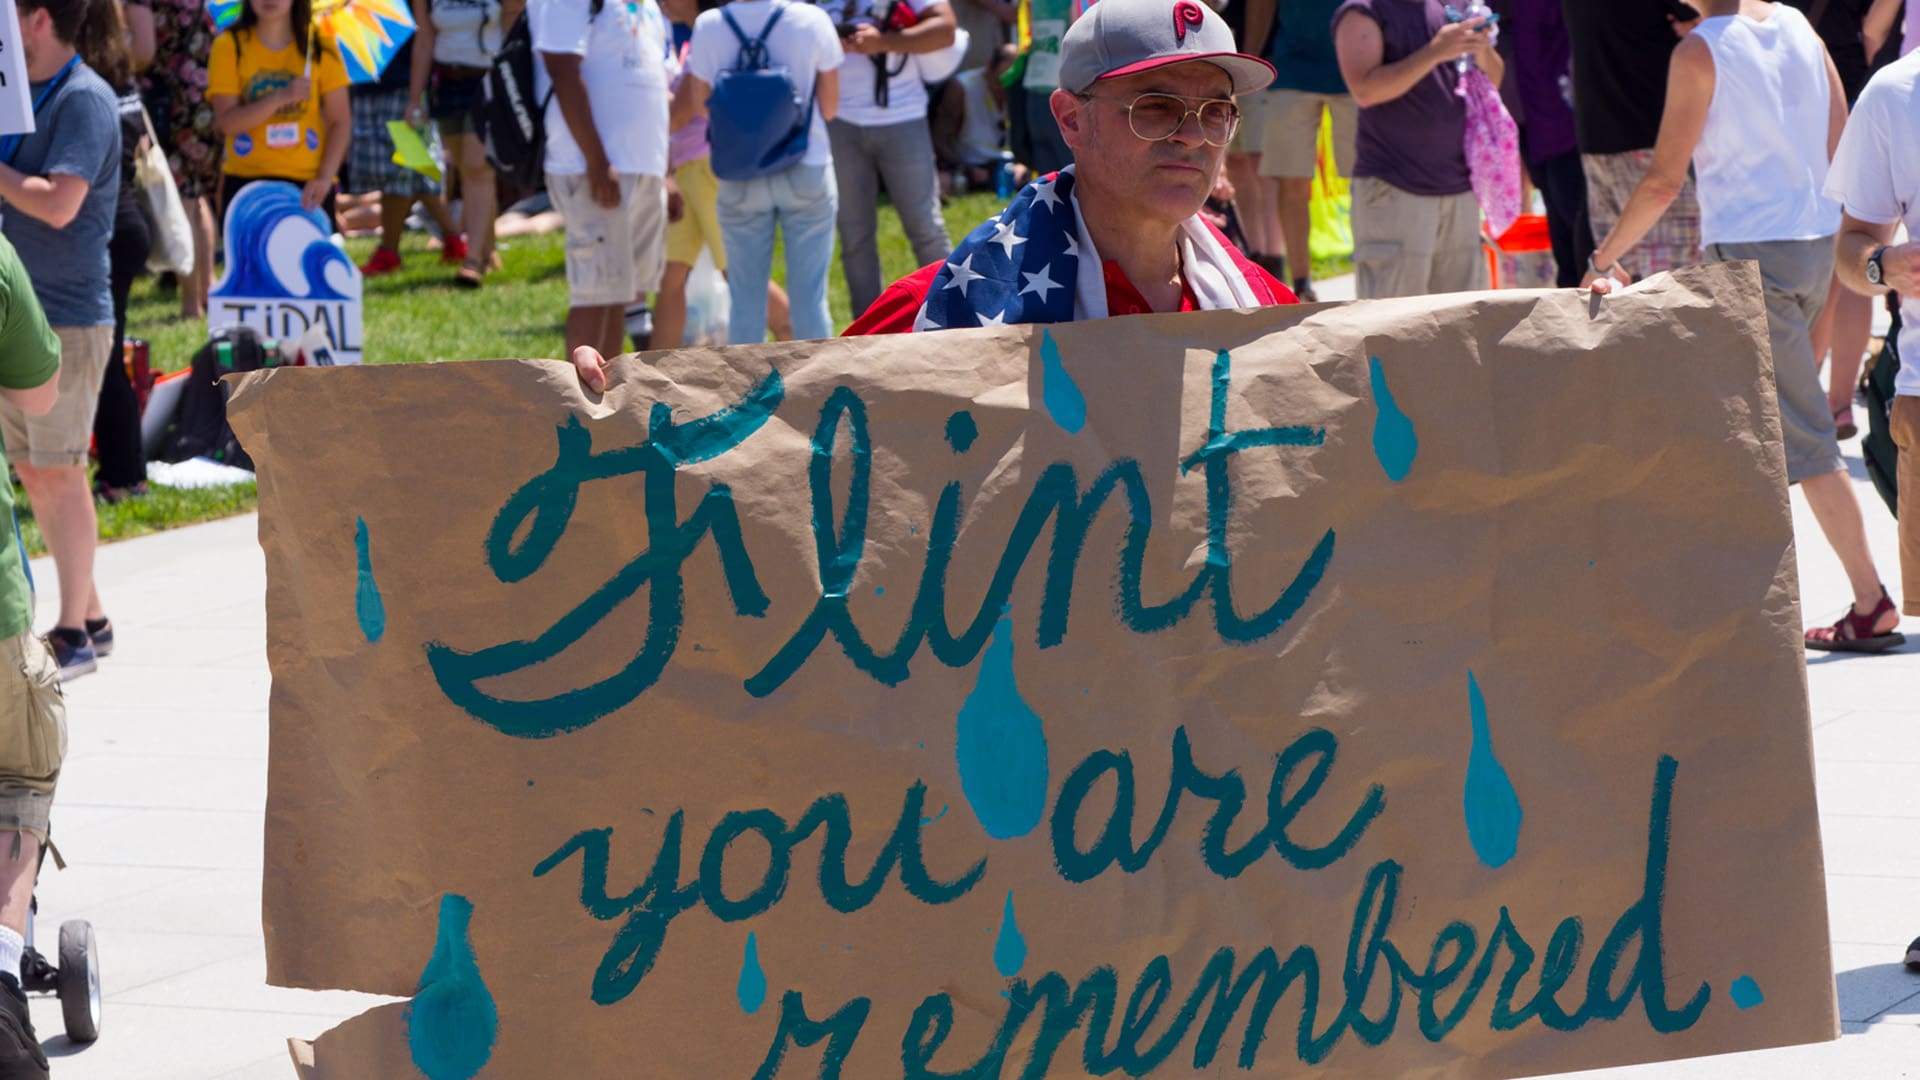 Flint water crisis poster.